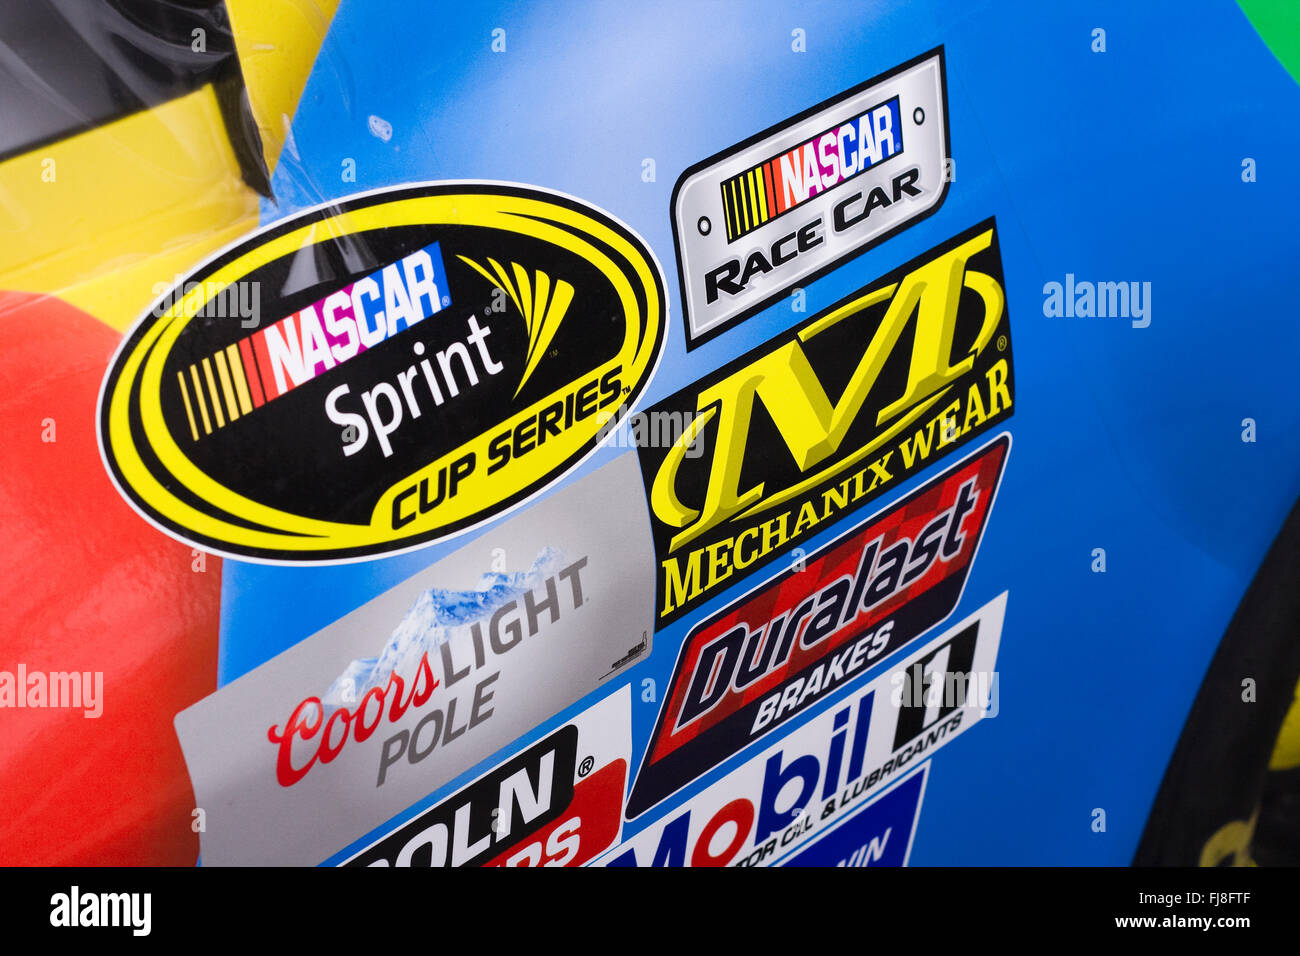 NASCAR, Mechanix Wear announce partnership renewal